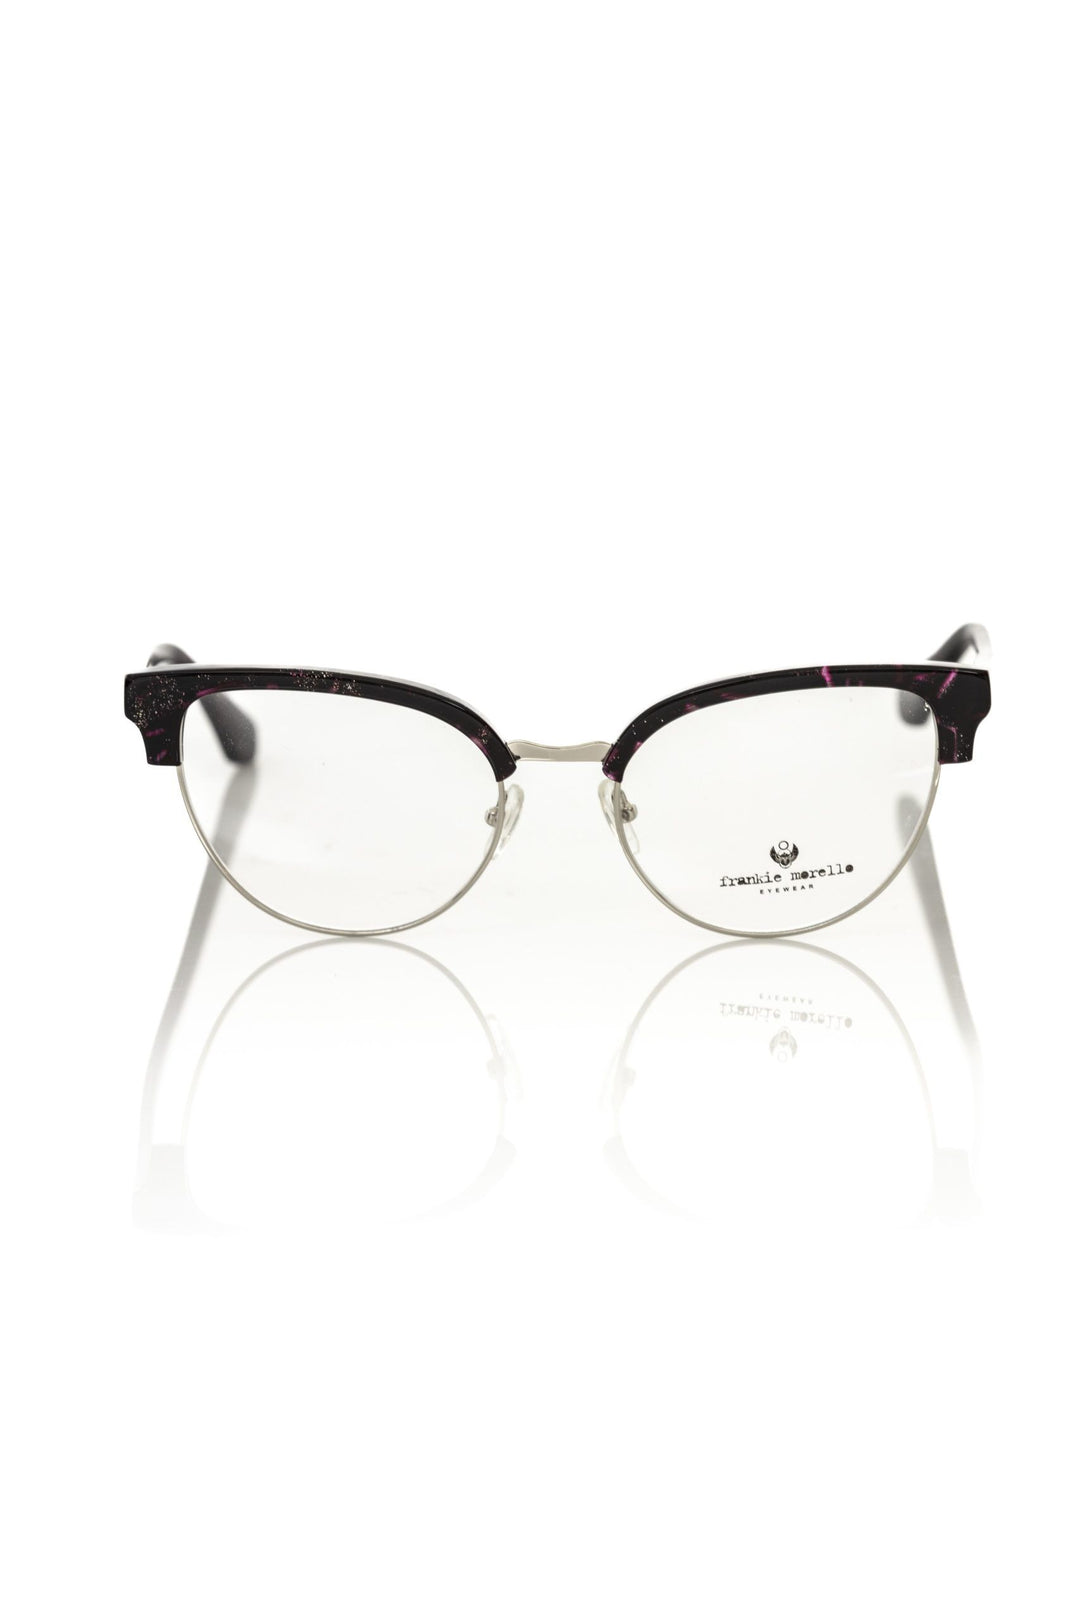 Frankie Morello Glittering Bordeaux Clubmaster Eyeglasses